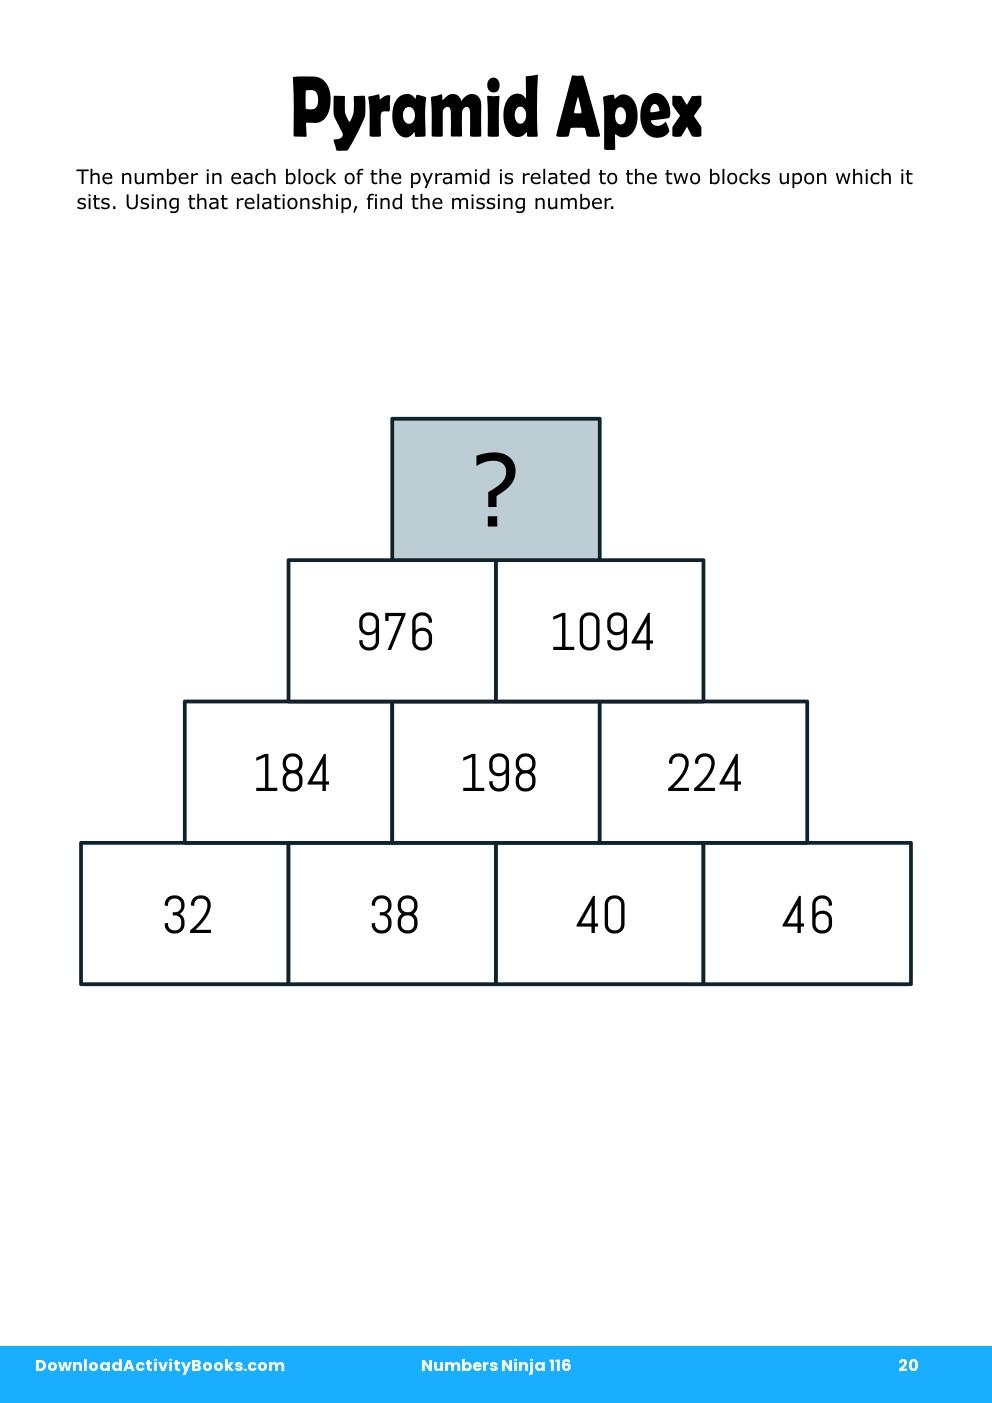 Pyramid Apex in Numbers Ninja 116